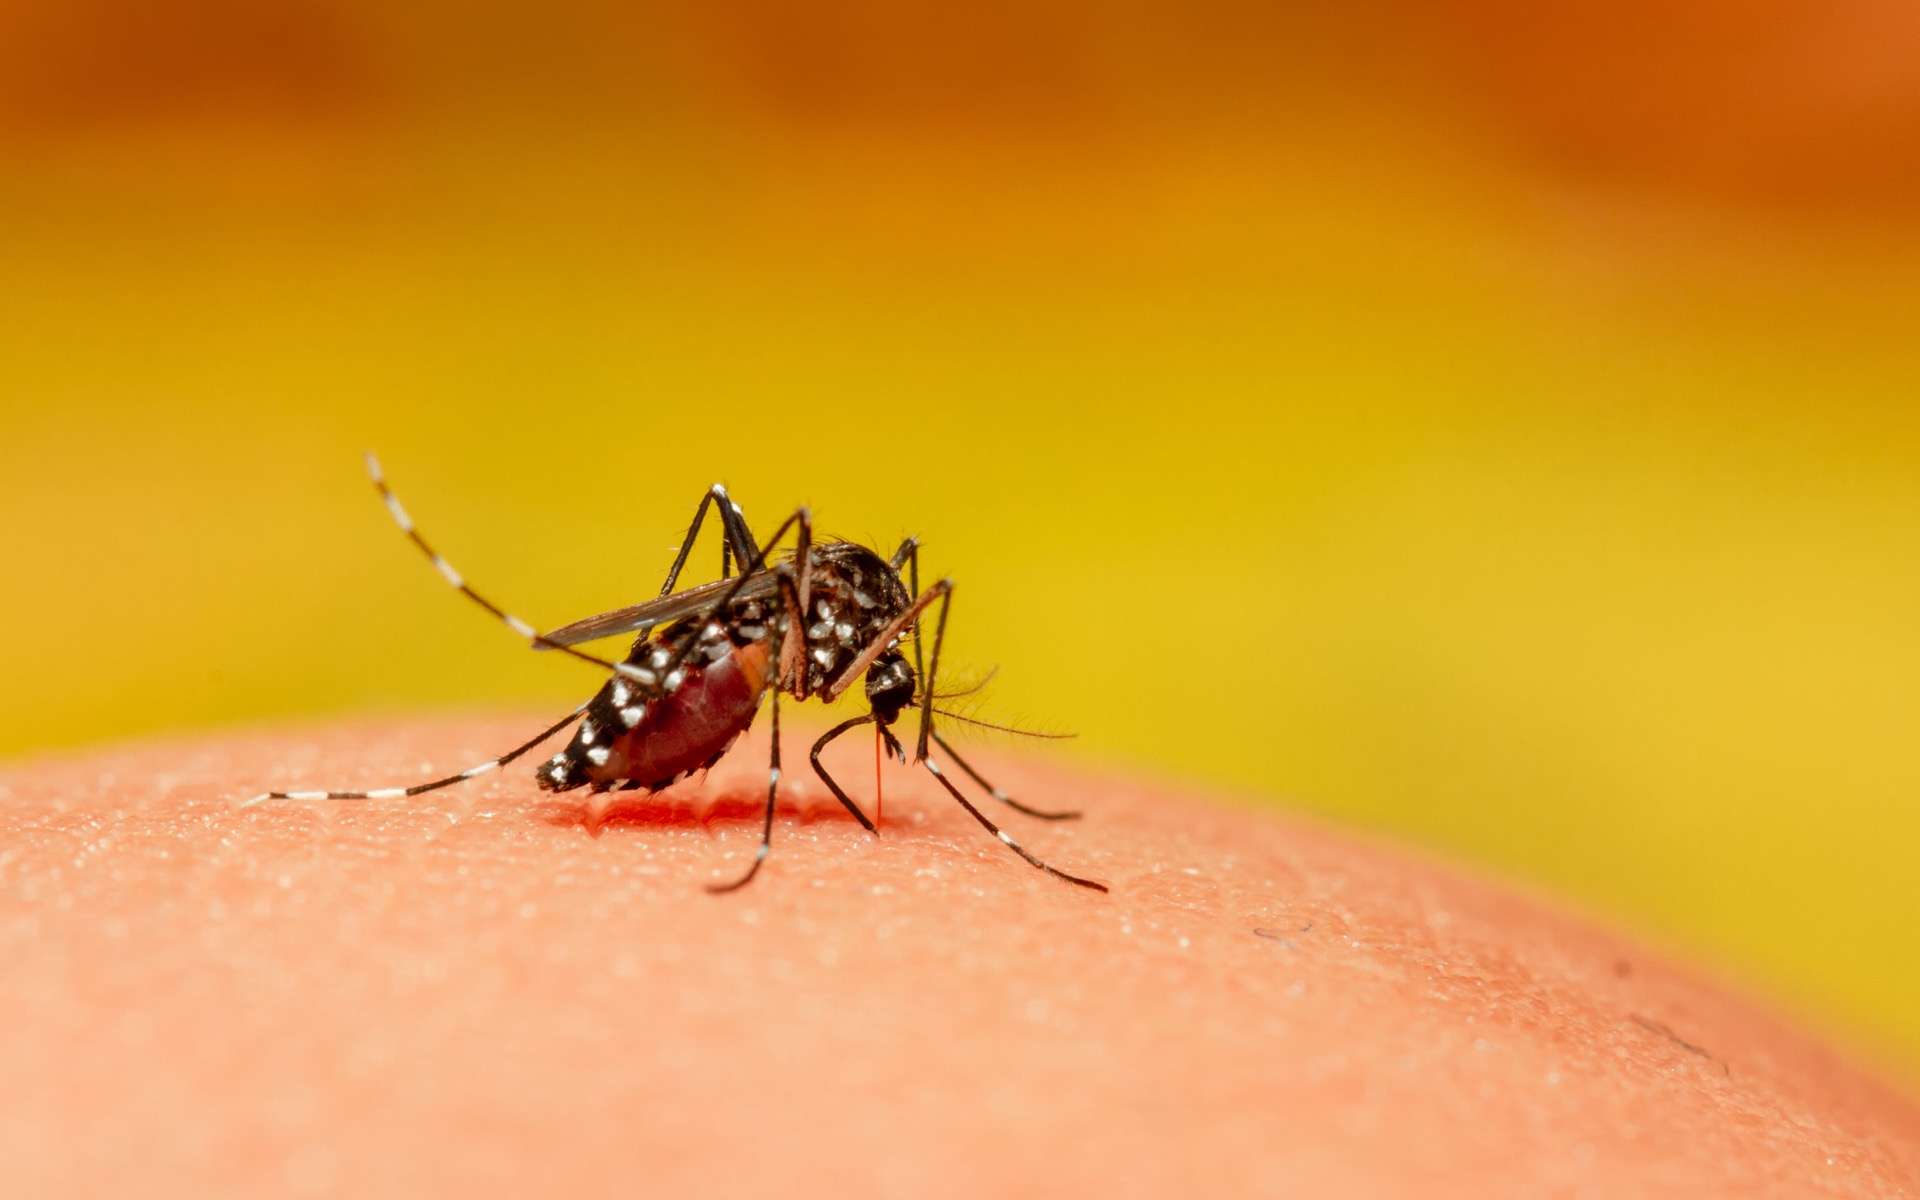 La prolifération du moustique tigre en France favorise la progression des maladies virales telles que dengue, zika et chikungunya. © Alex, Adobe stock